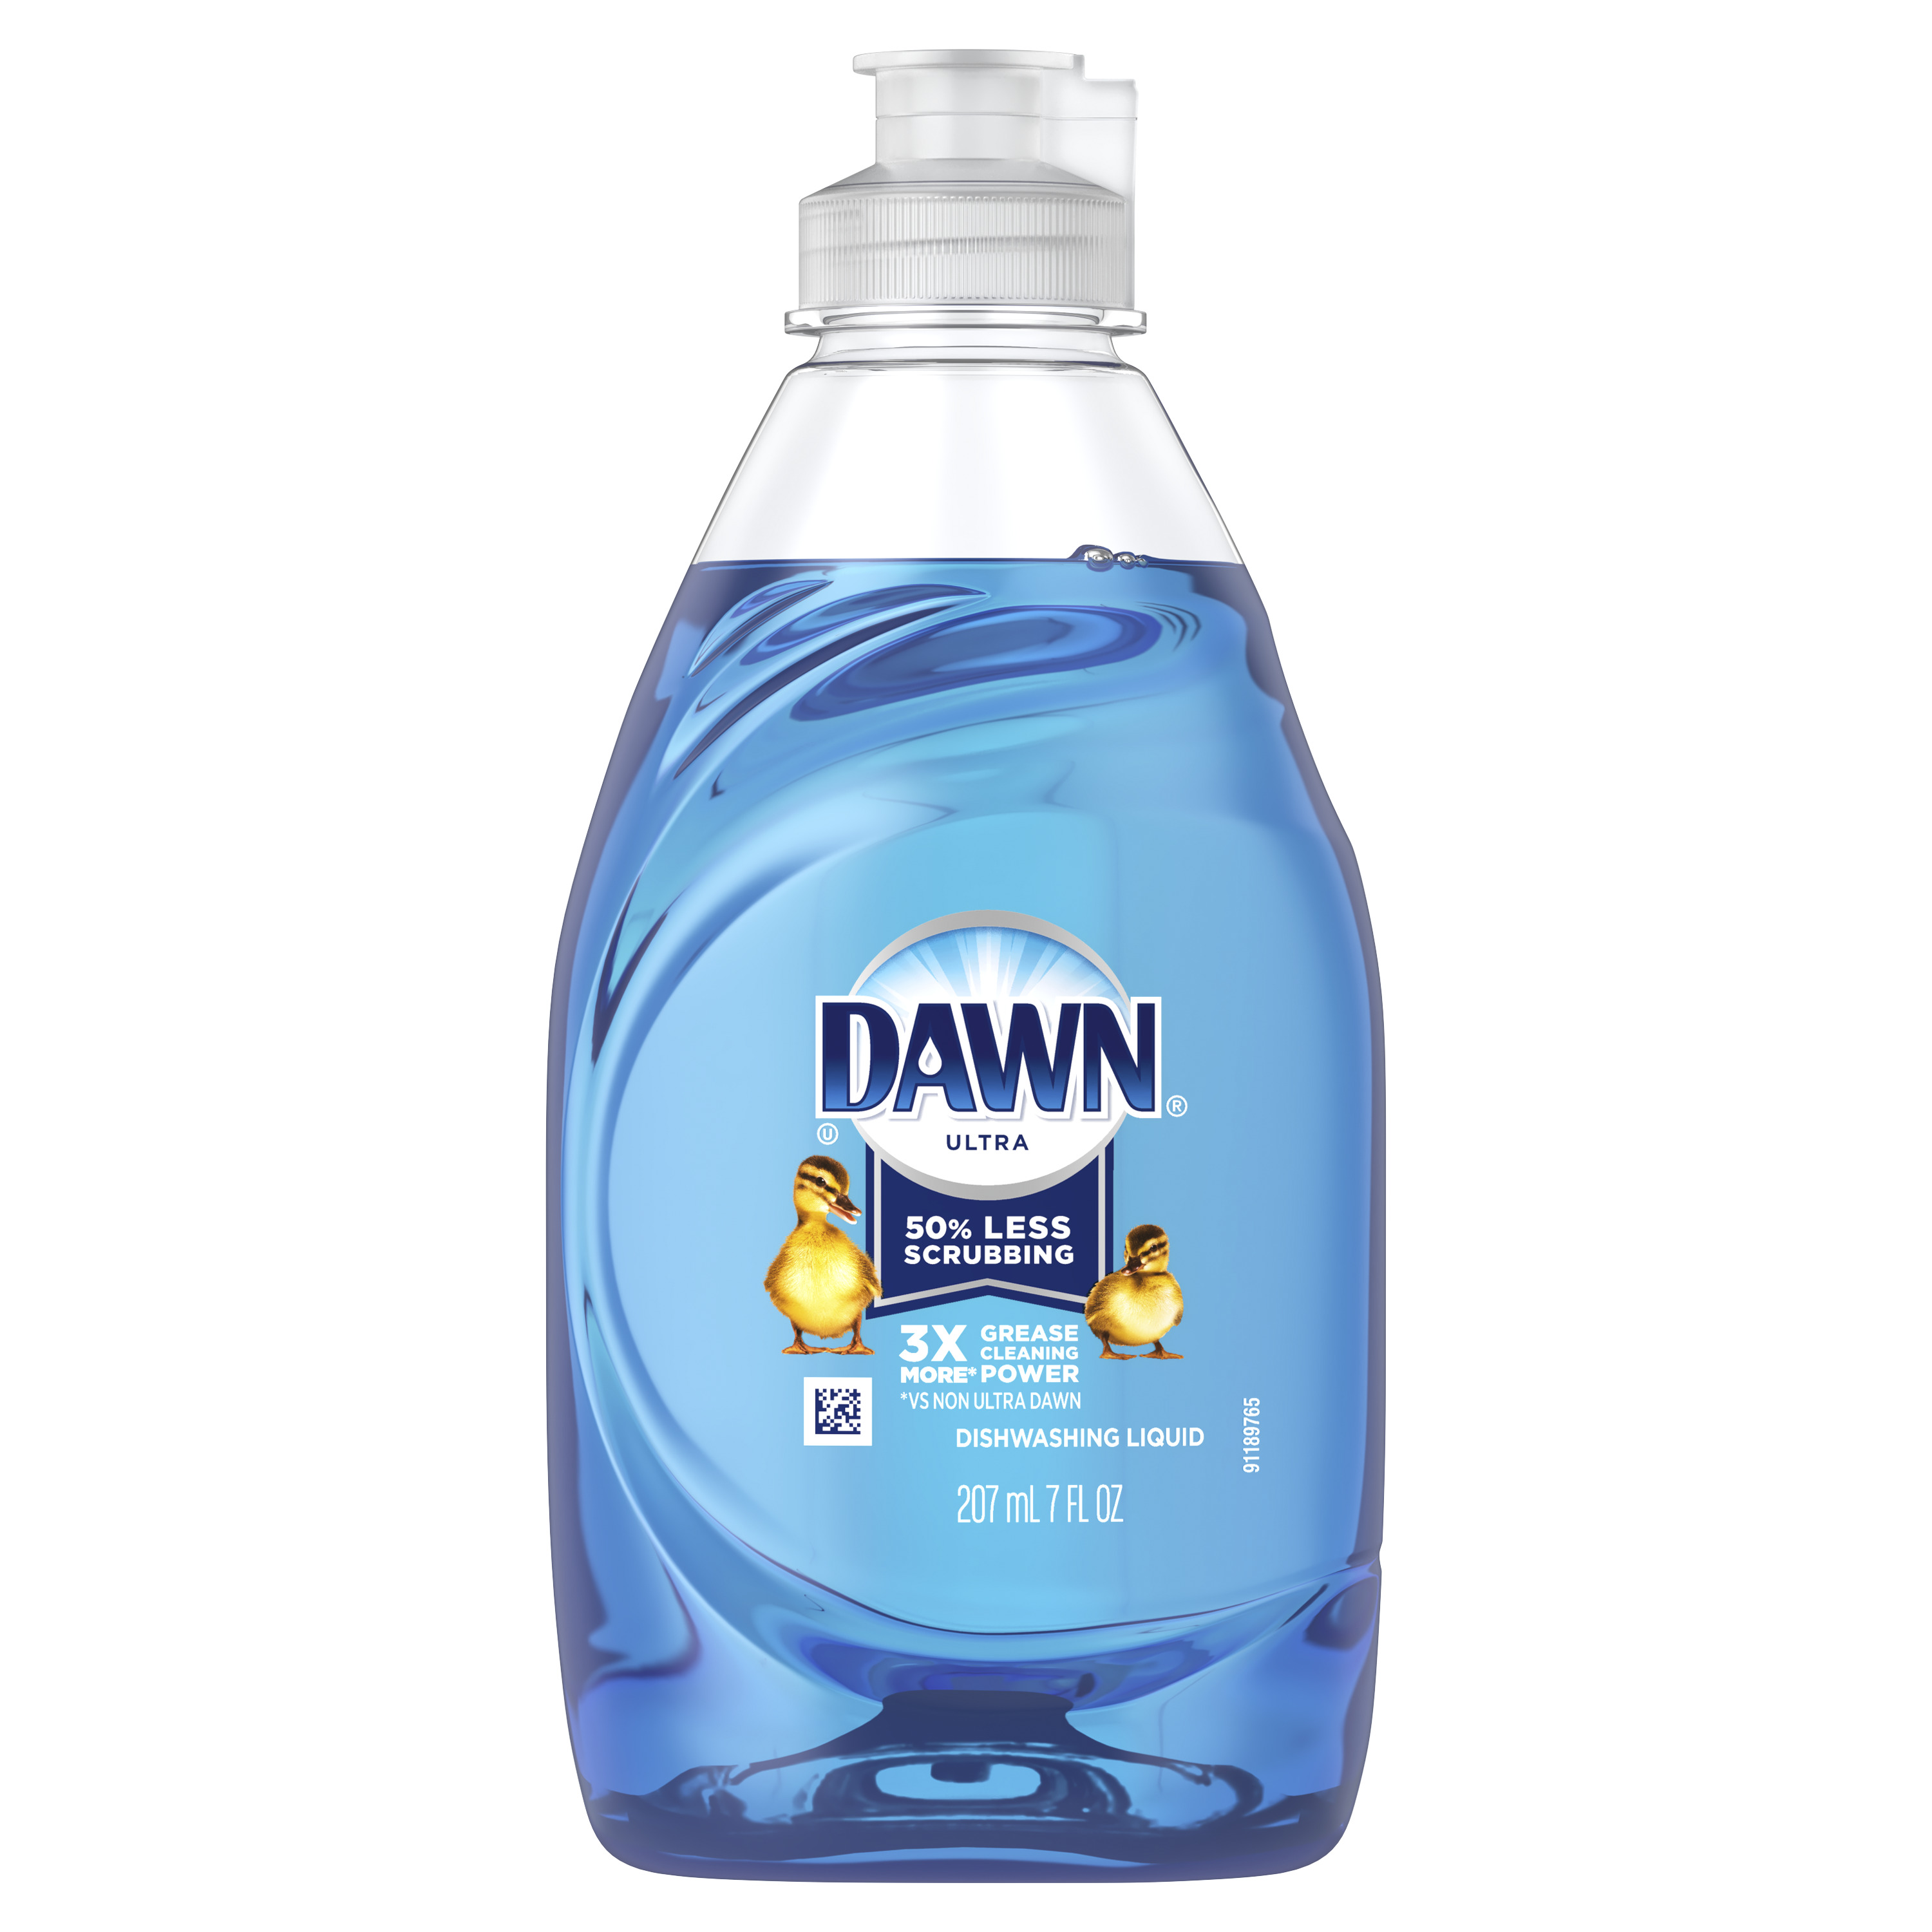 39713 Dishwashing Soap, 7 oz, Liquid, Perfume, Clear Blue